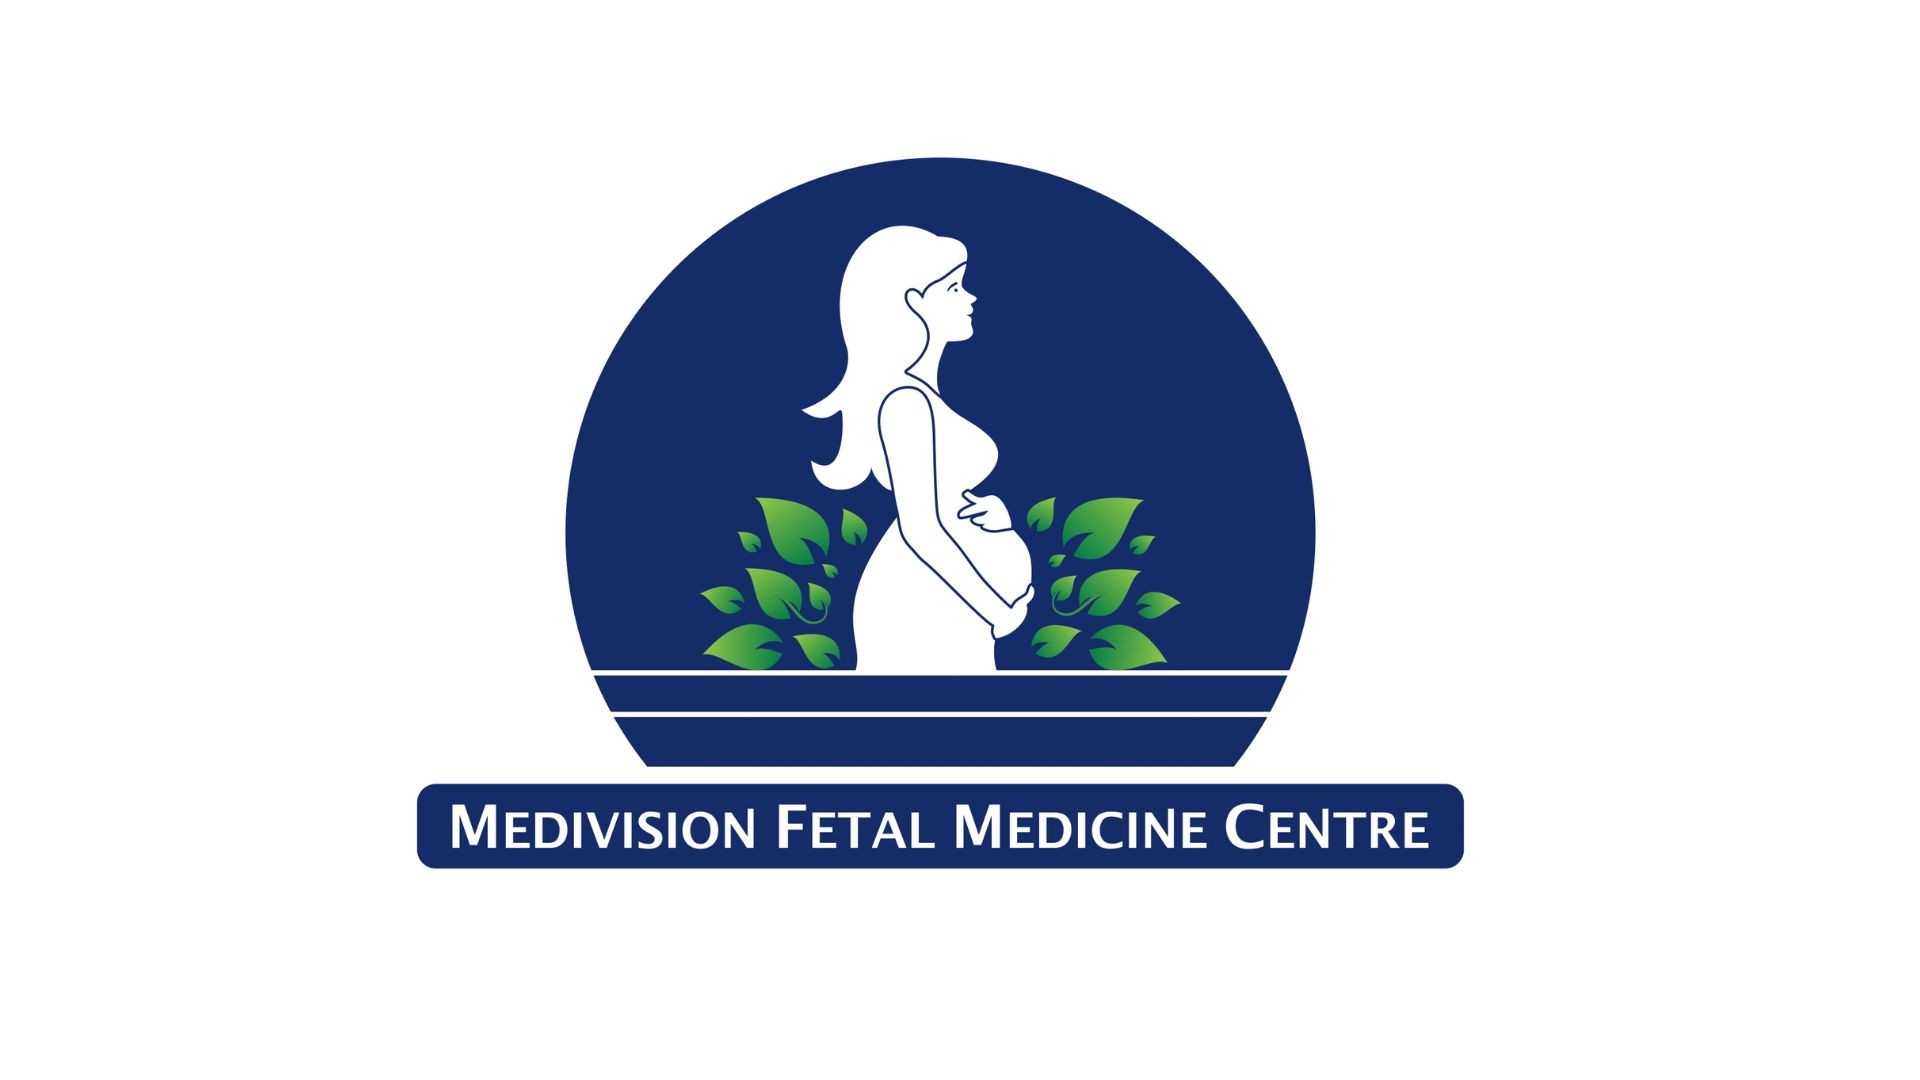 Medivision Fetal Medicine & Fertility Centre